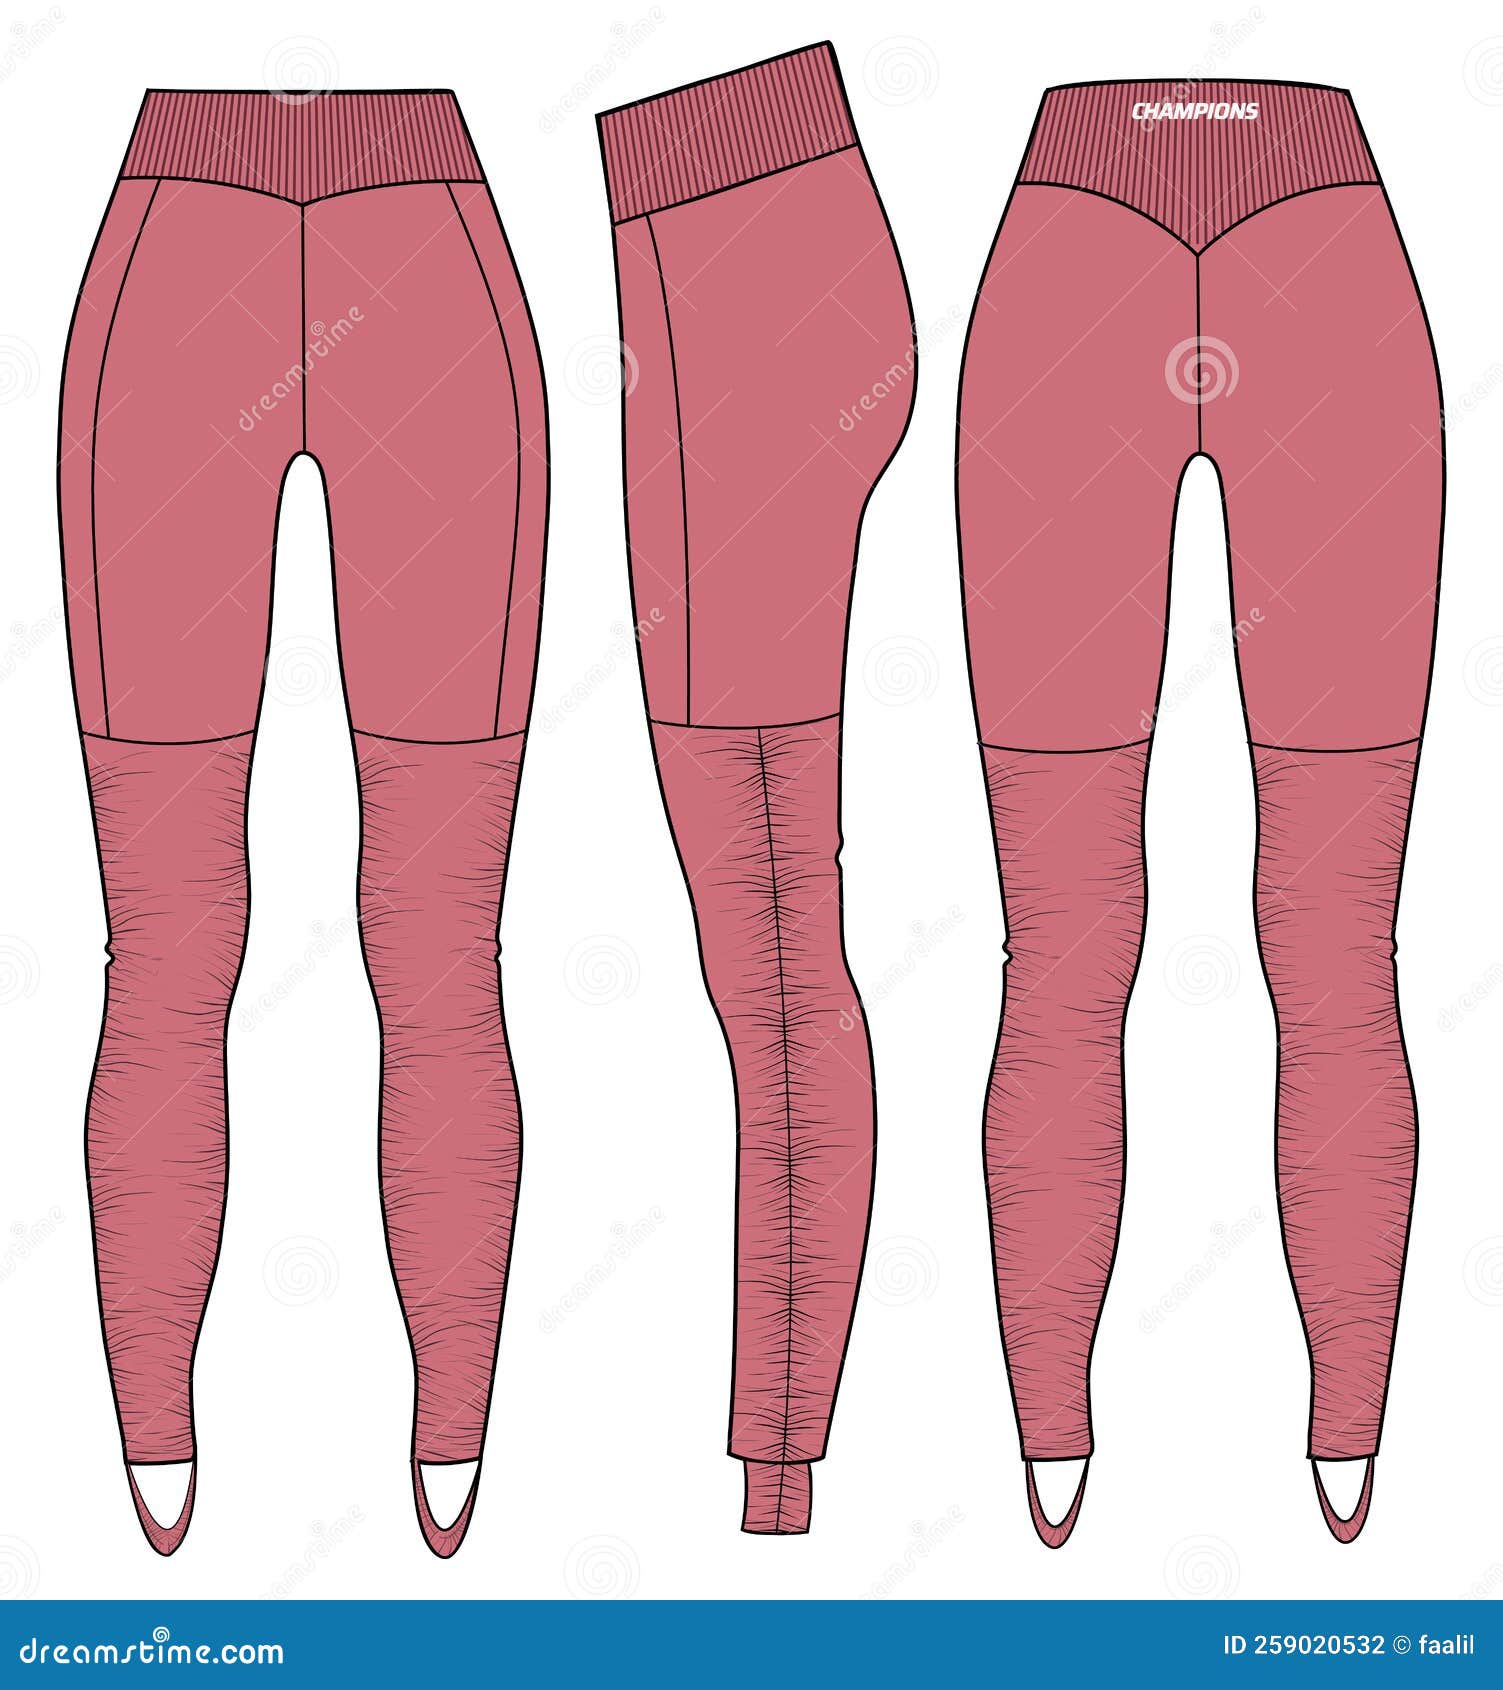 https://thumbs.dreamstime.com/z/women-sports-running-tights-leggings-pants-design-flat-sketch-vector-illustration-compression-concept-front-back-view-259020532.jpg